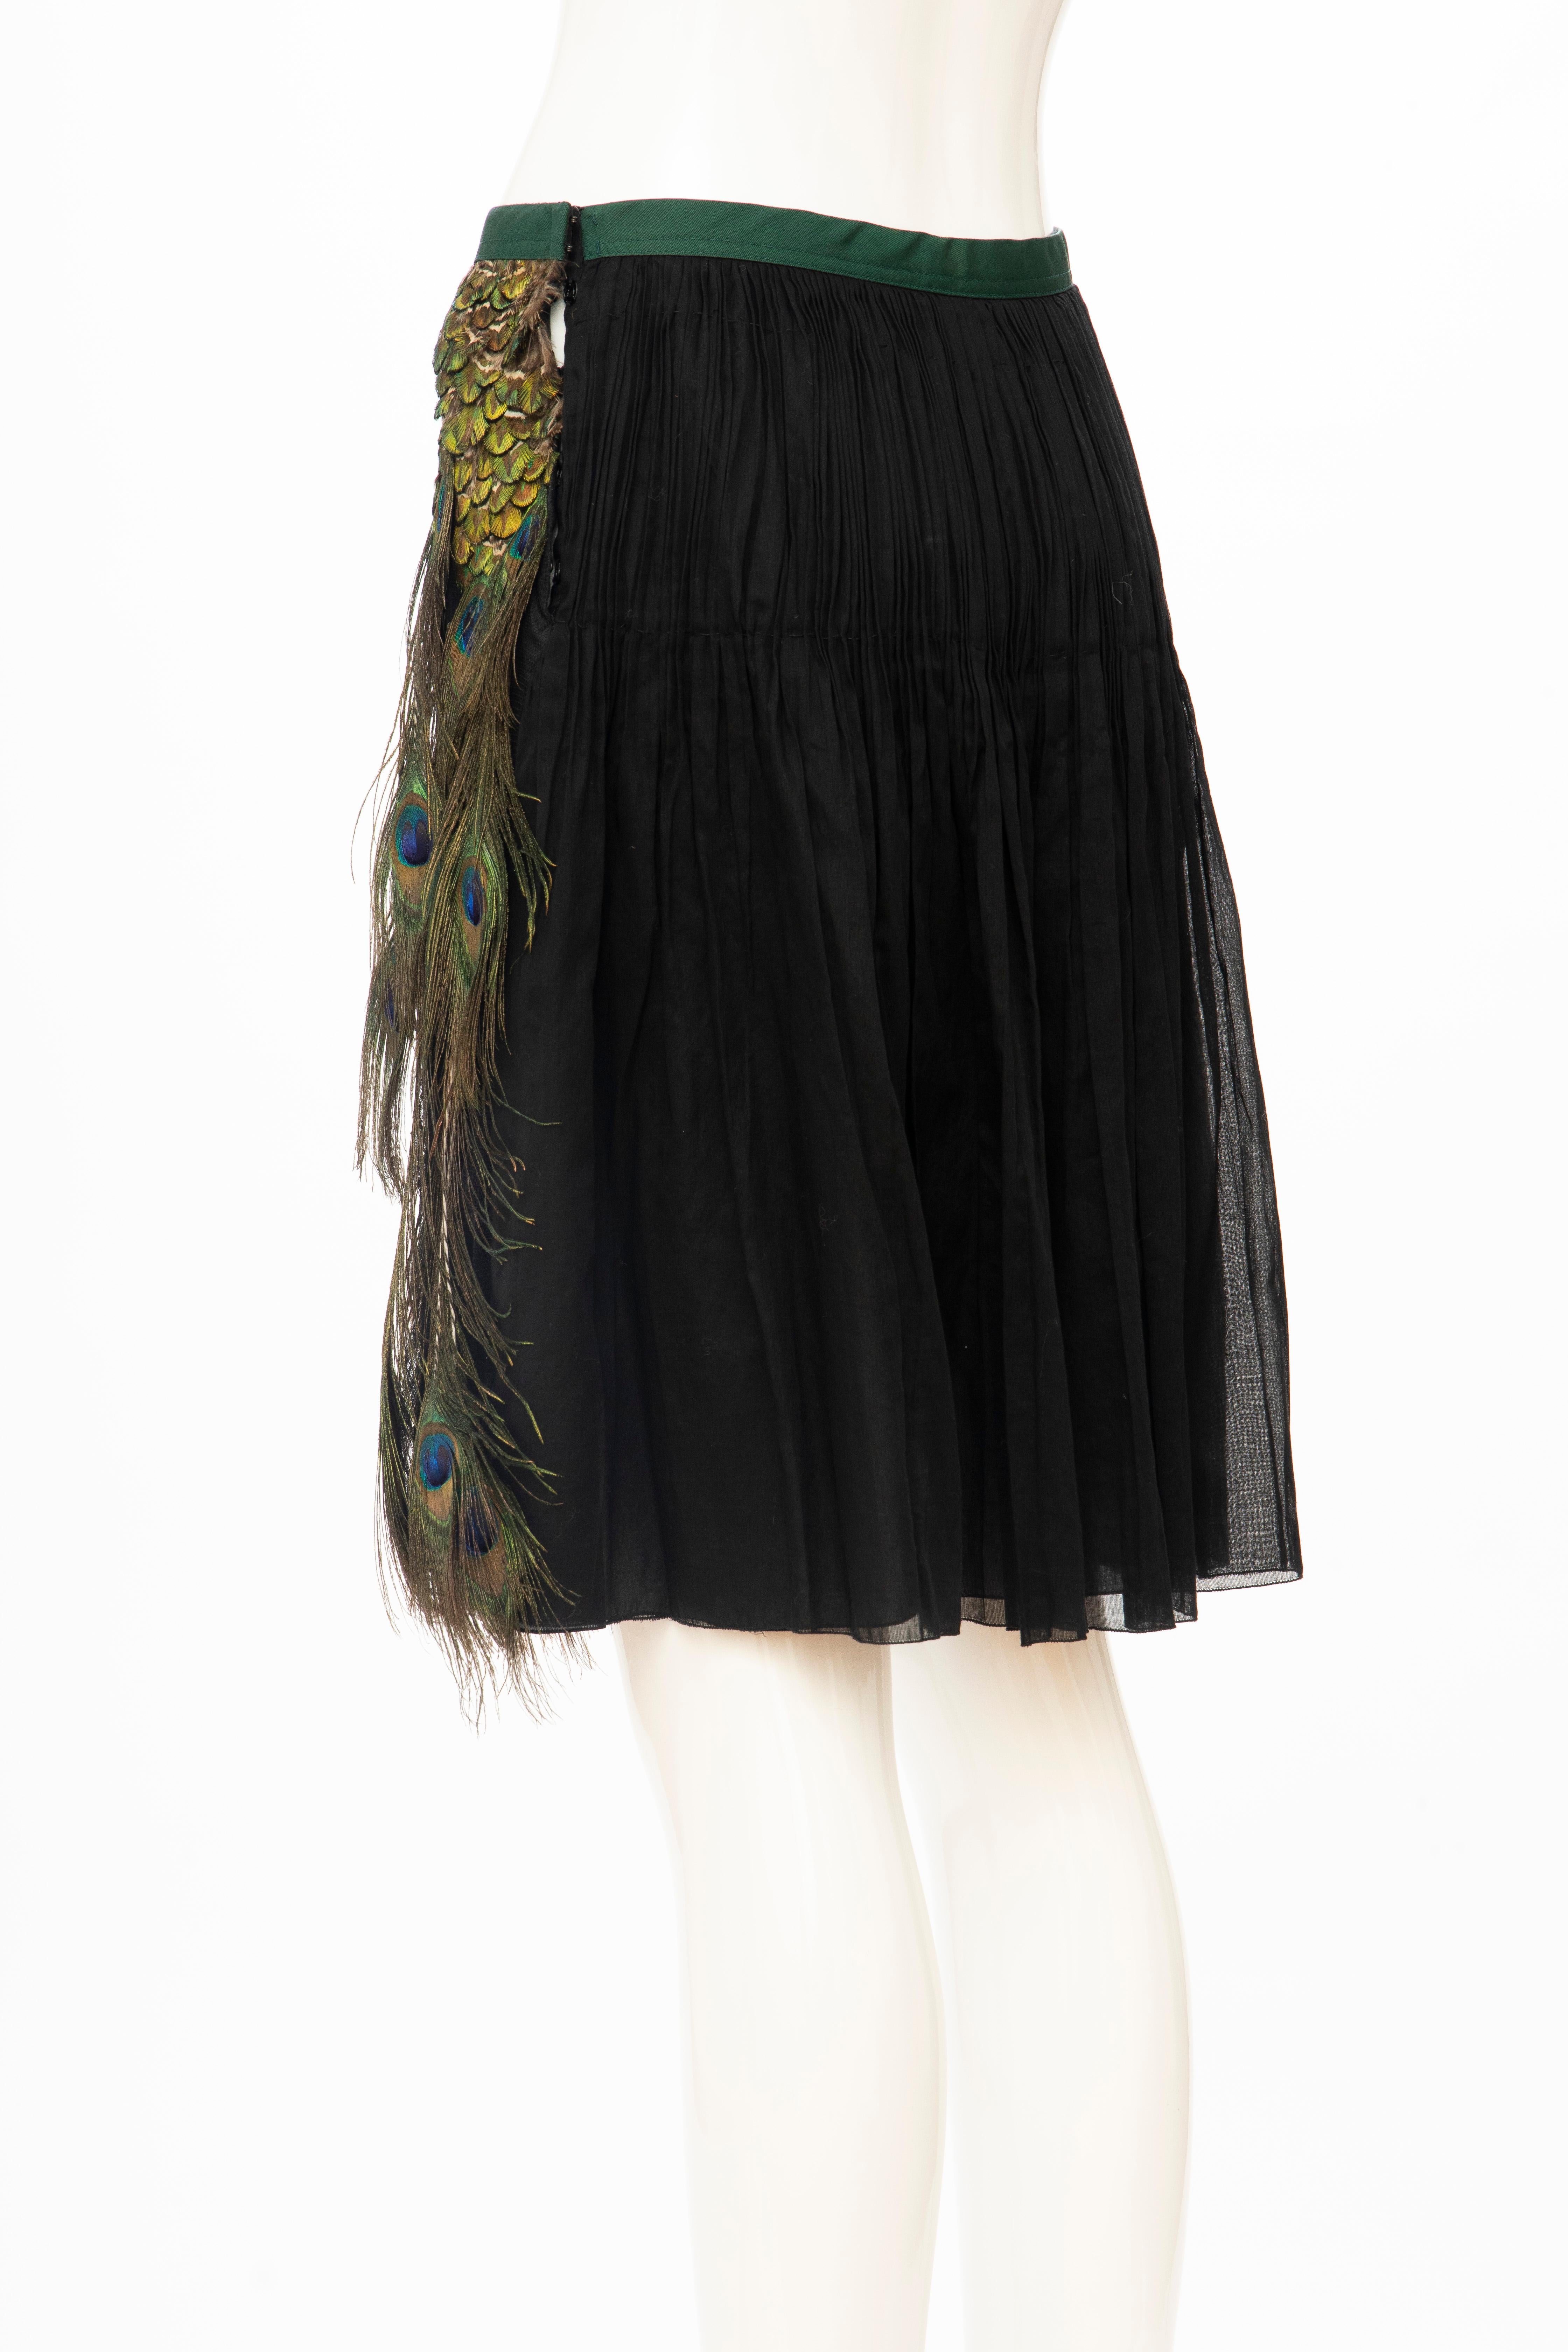 Prada Runway Black Cotton Pleated Skirt Appliquéd Peacock Feathers, Spring 2005 For Sale 1